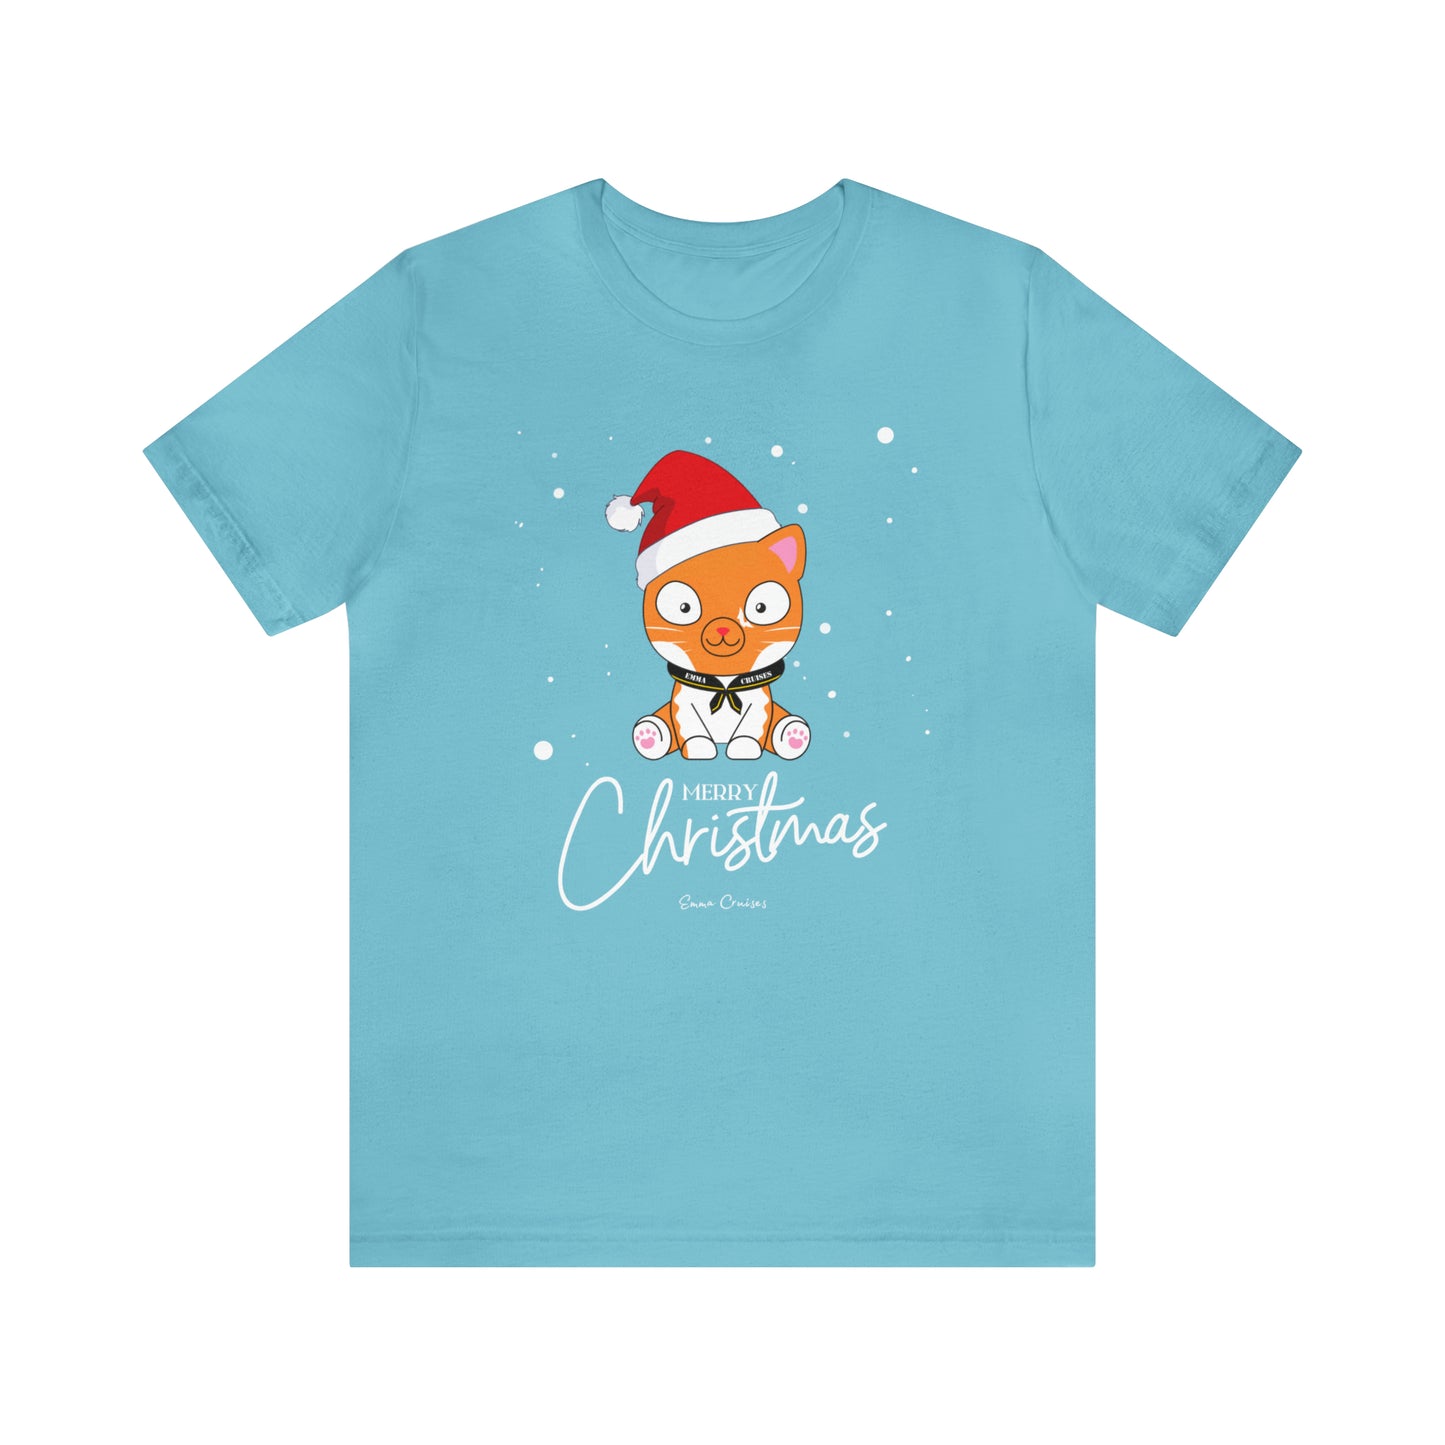 Feliz Navidad - Camiseta UNISEX